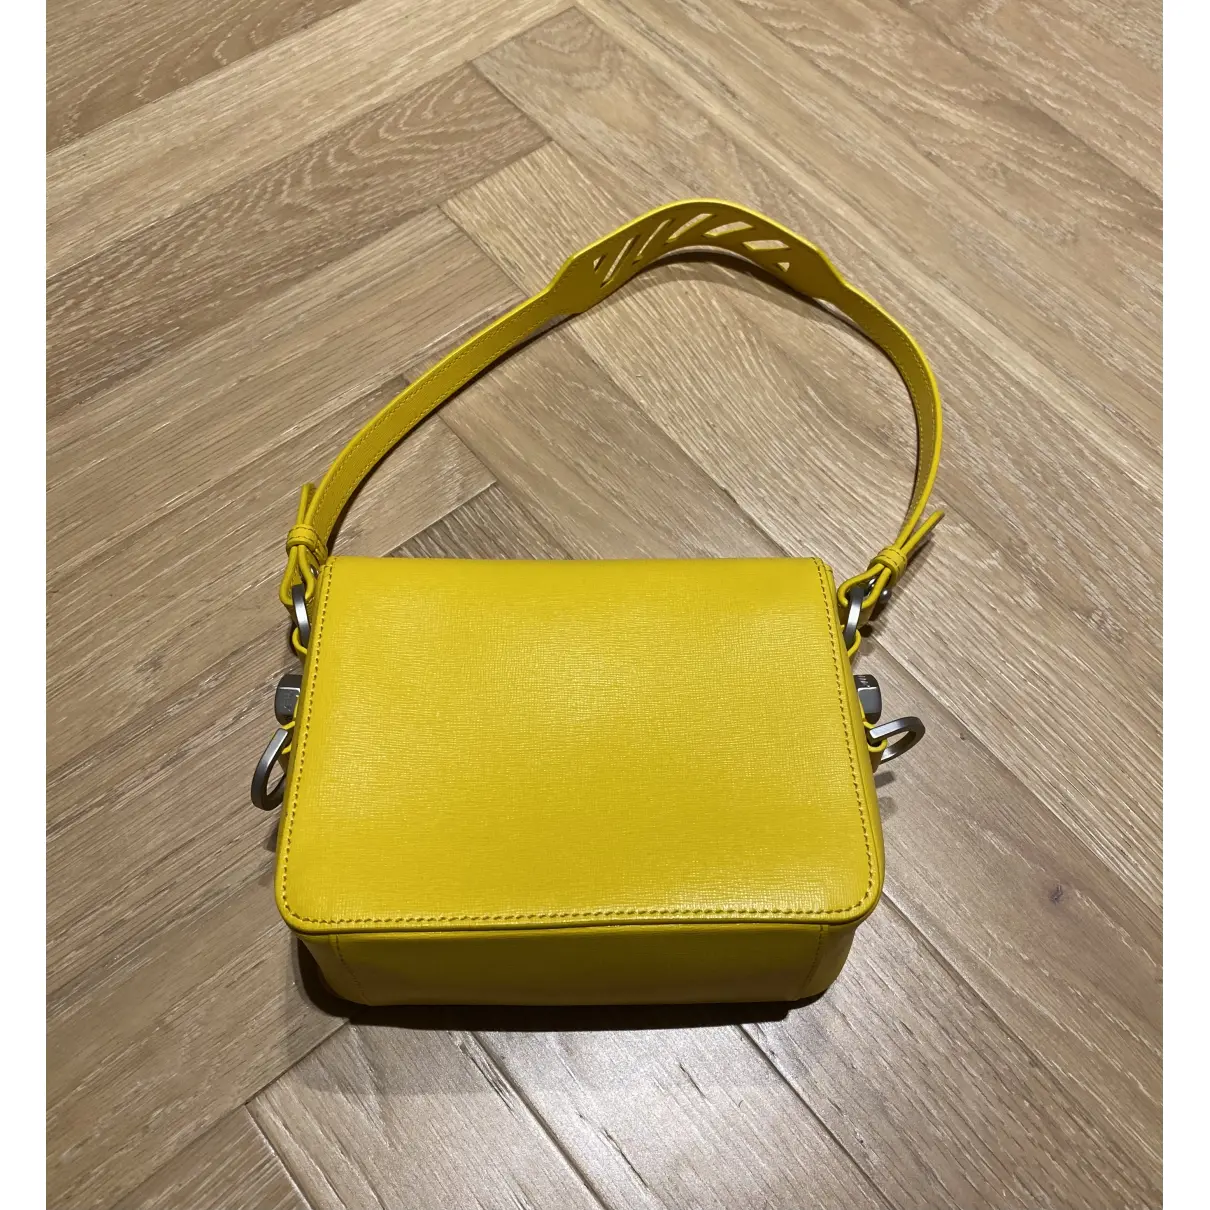 Buy Off-White Leather handbag online